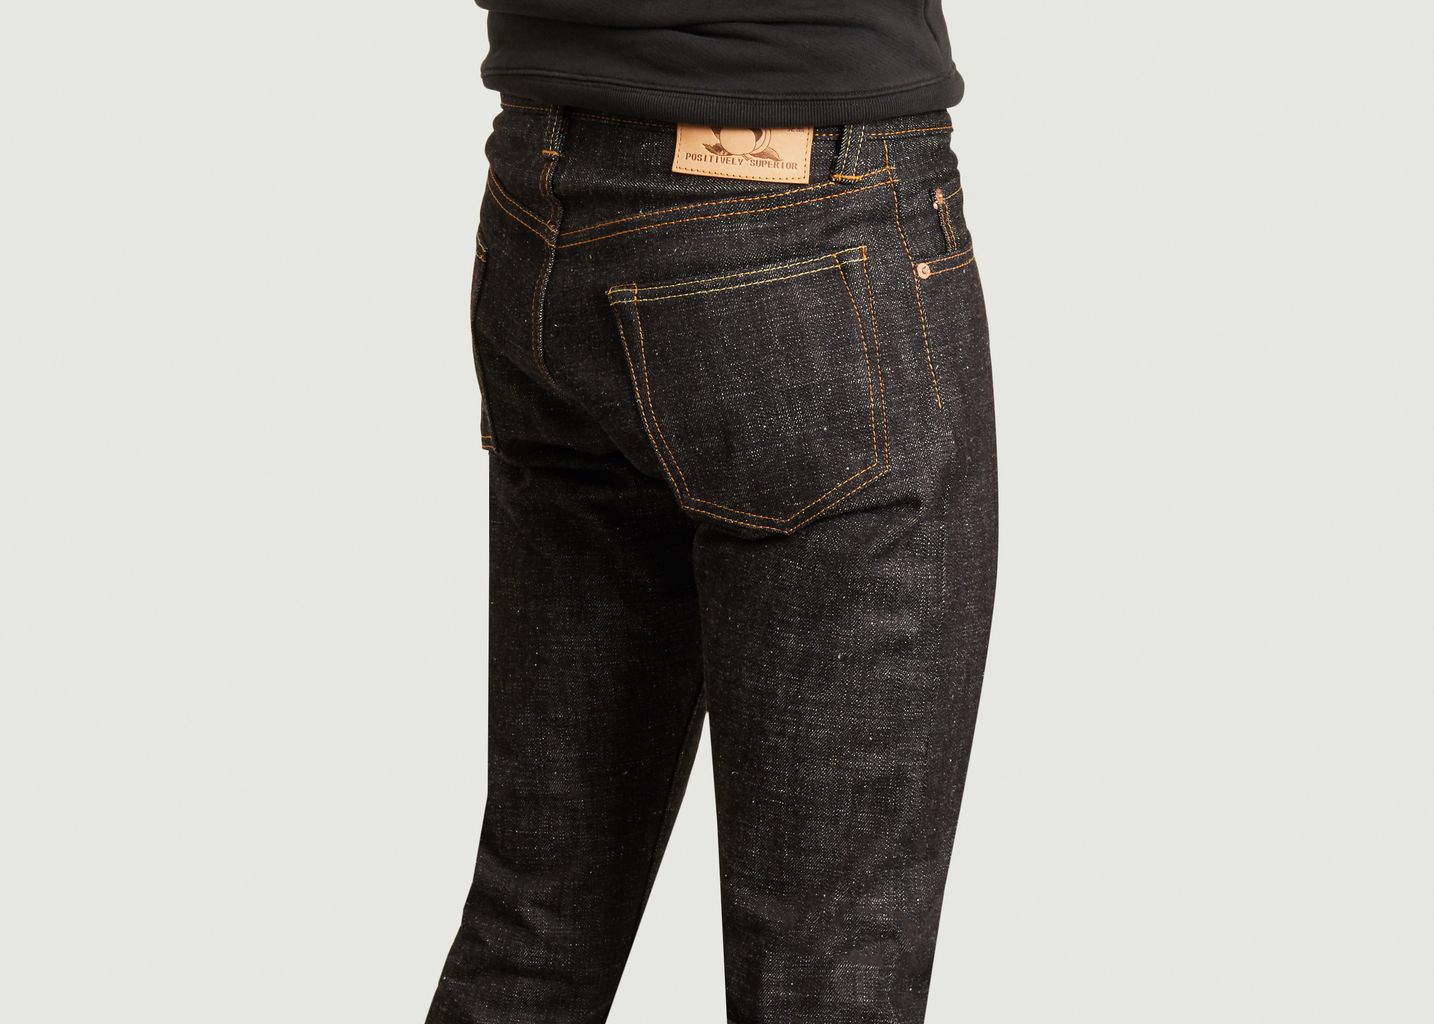 16 oz 0405 high tapered jean  - Momotaro Jeans